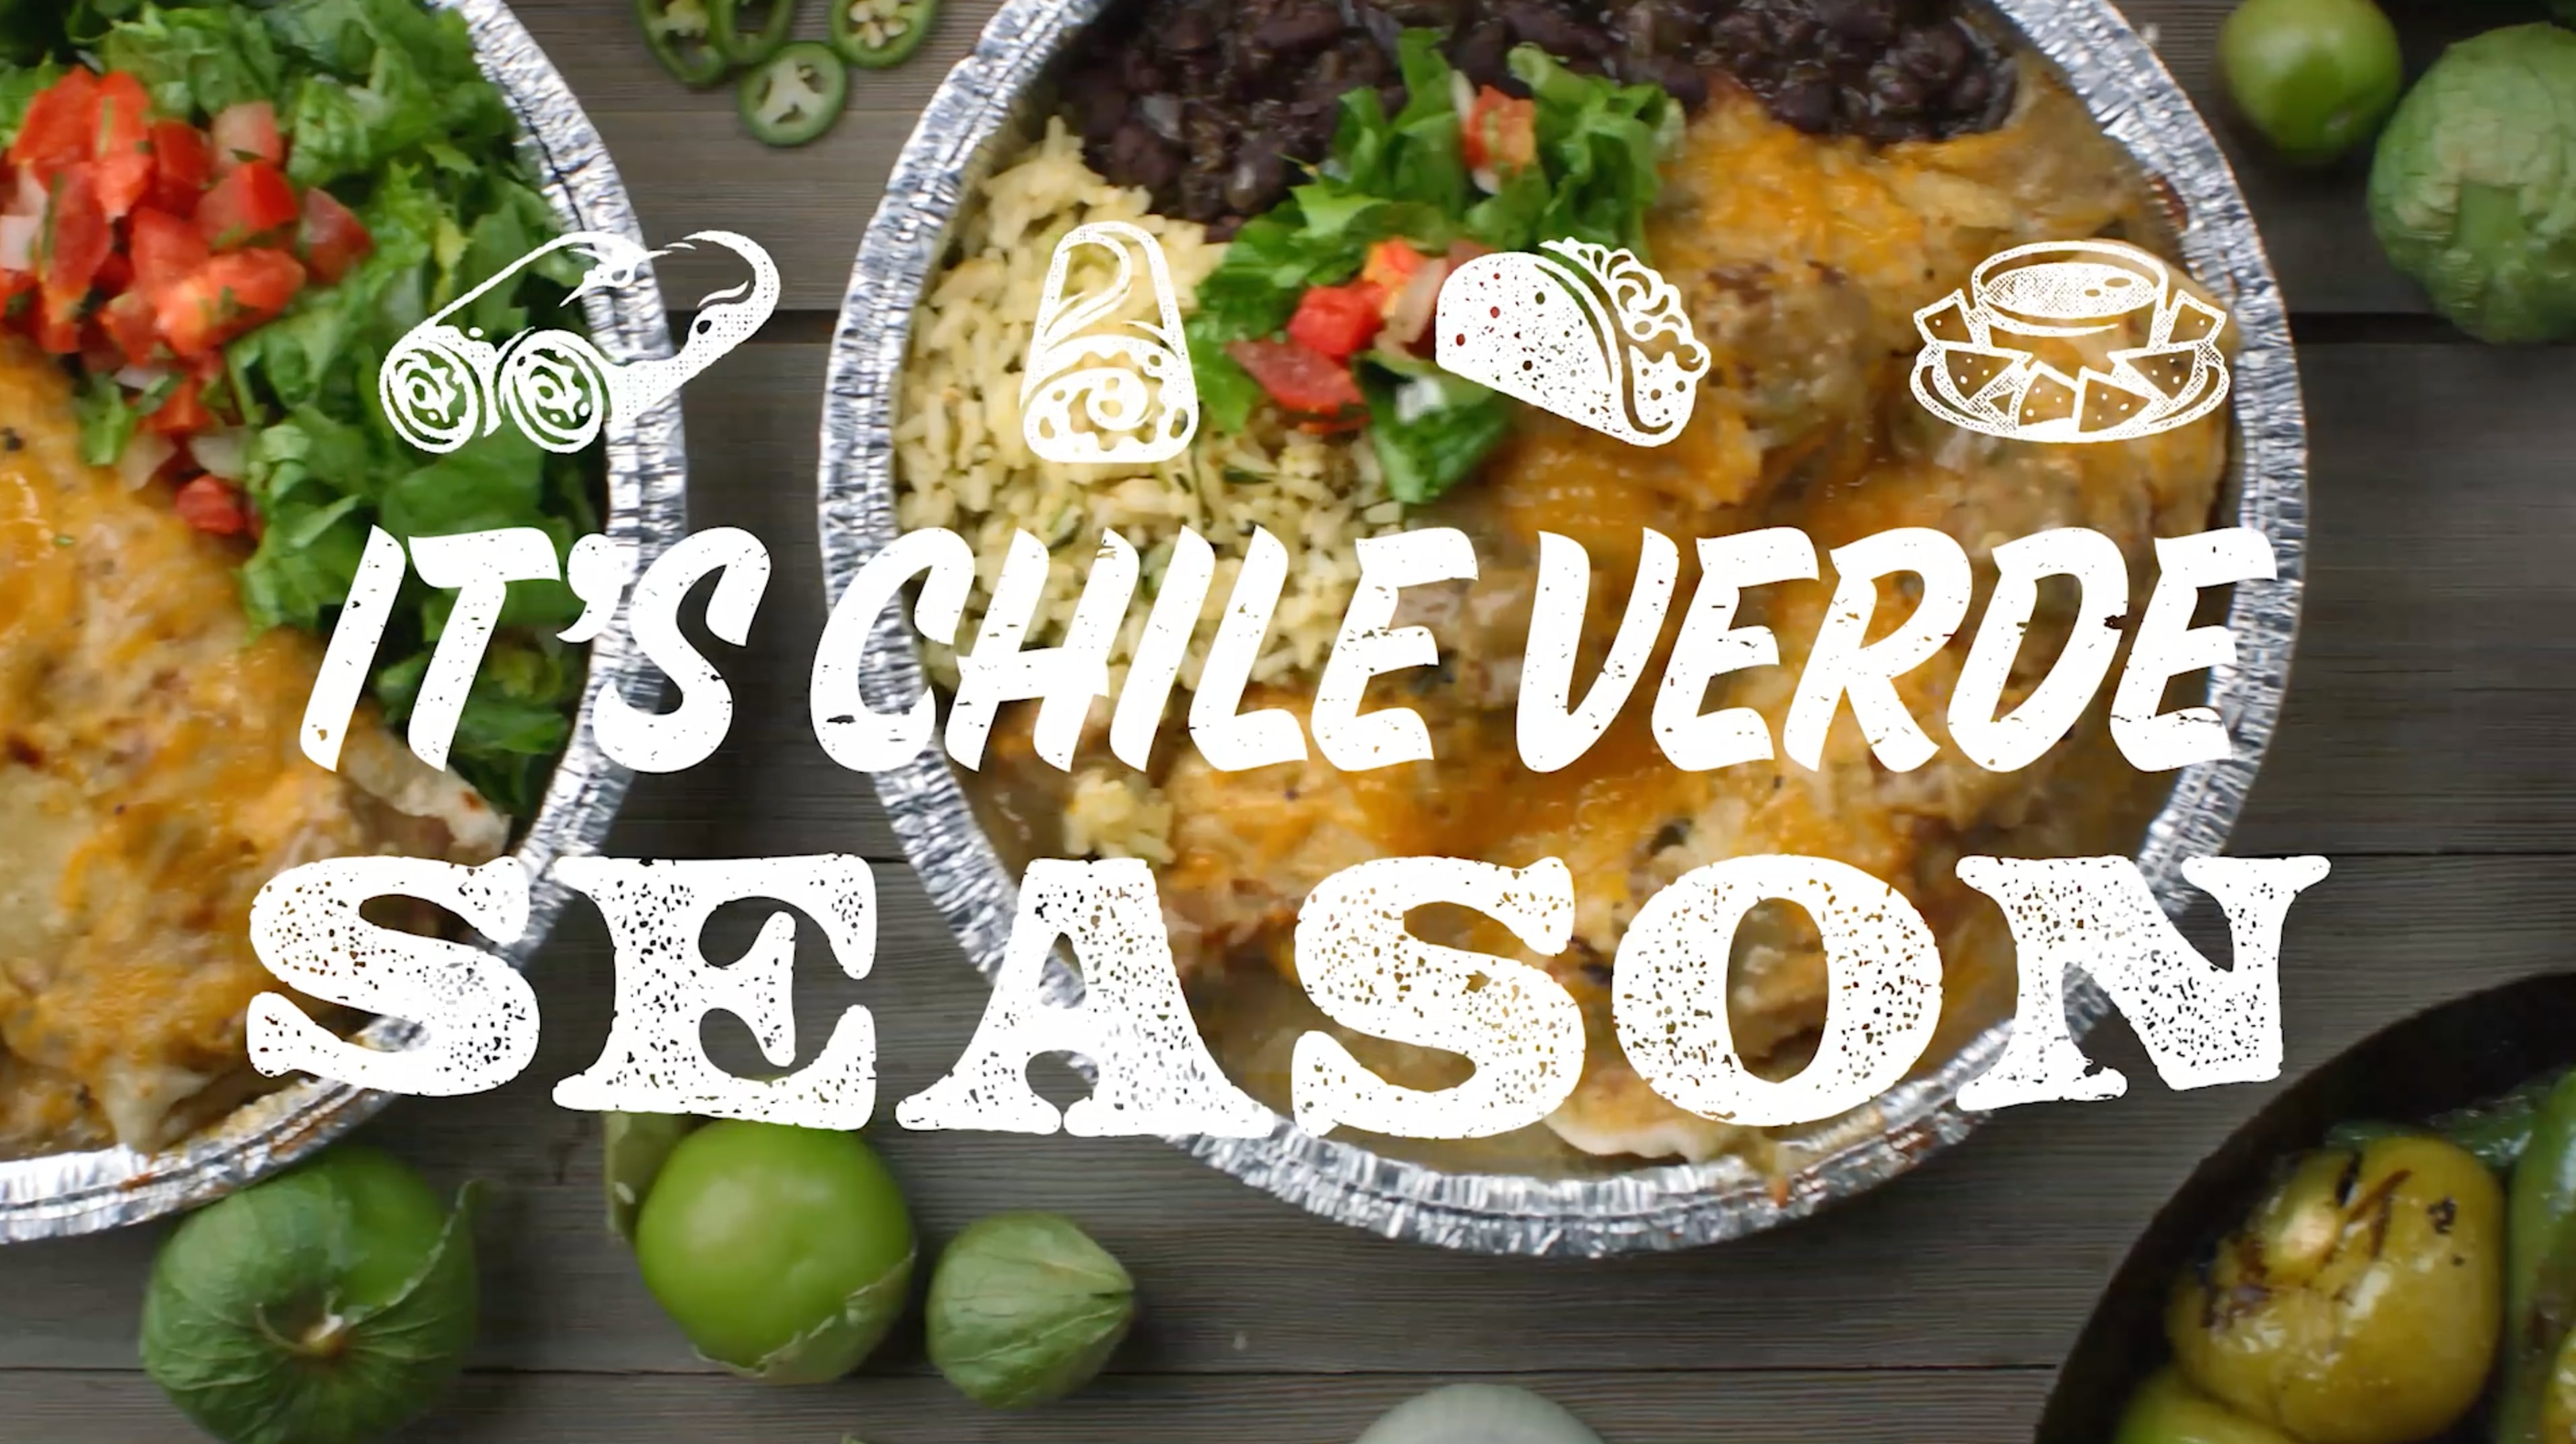 Costa Vida Chile Verde Is Back 06 on Vimeo